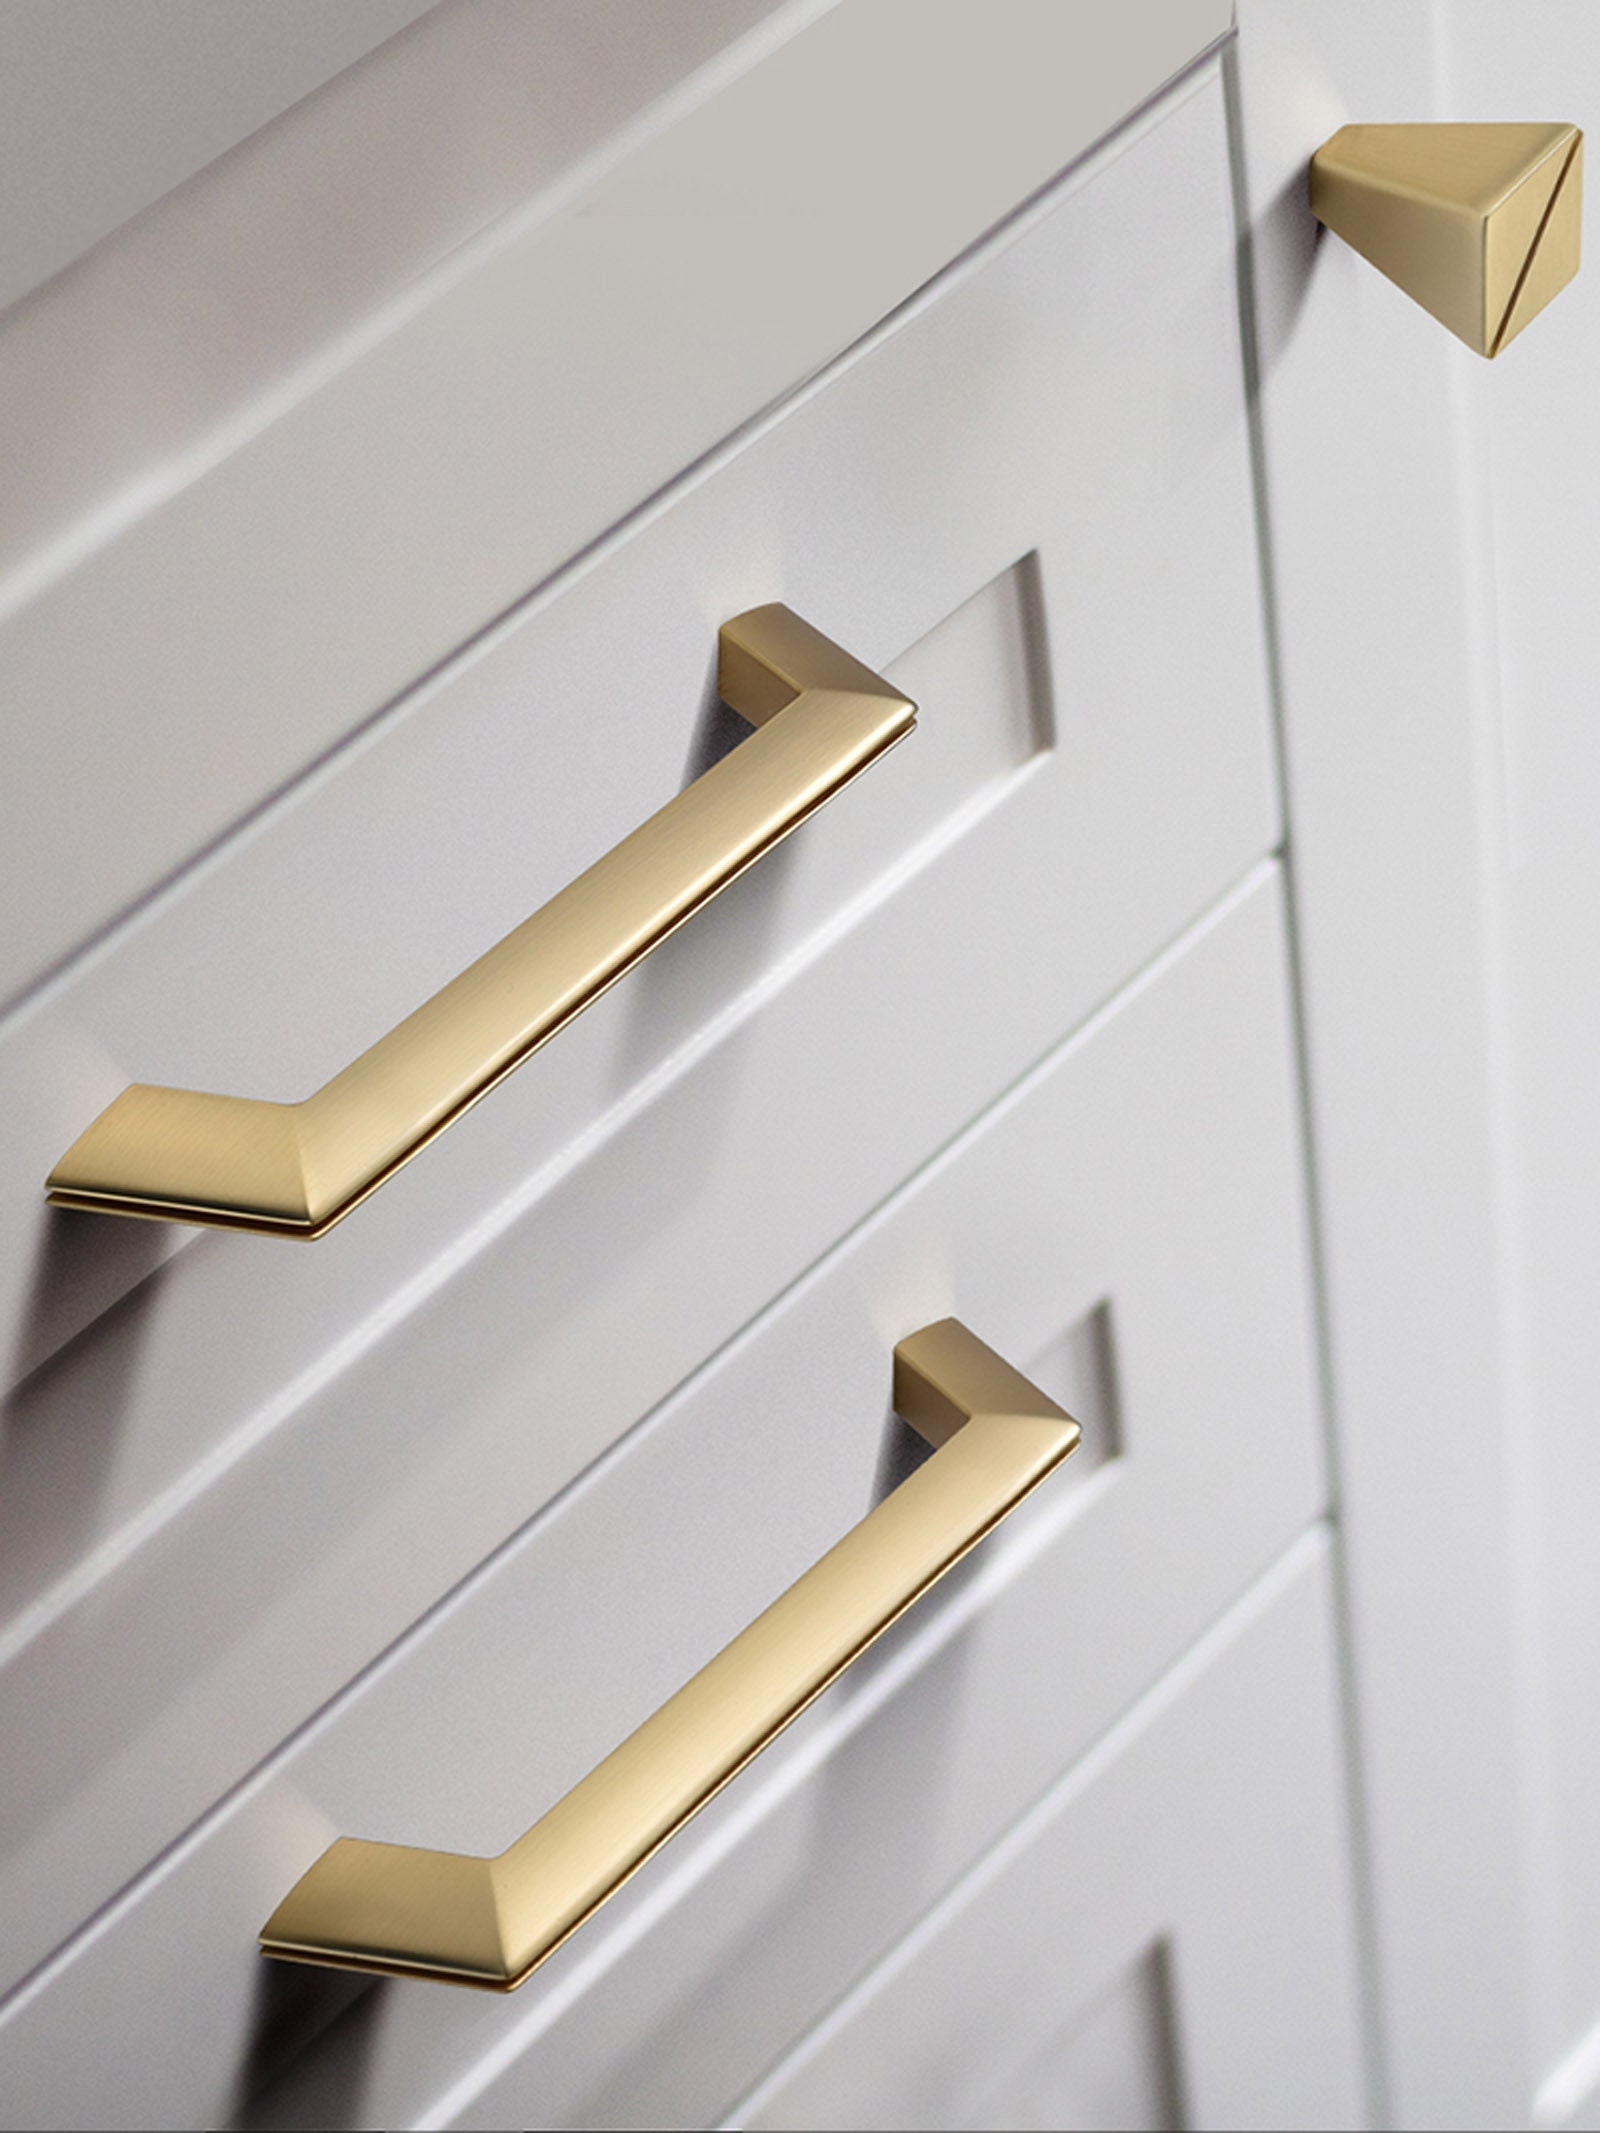 Door handle golden Chinese style wardrobe drawer handle modern minimalist cabinet American furniture hardware accessories handle M16